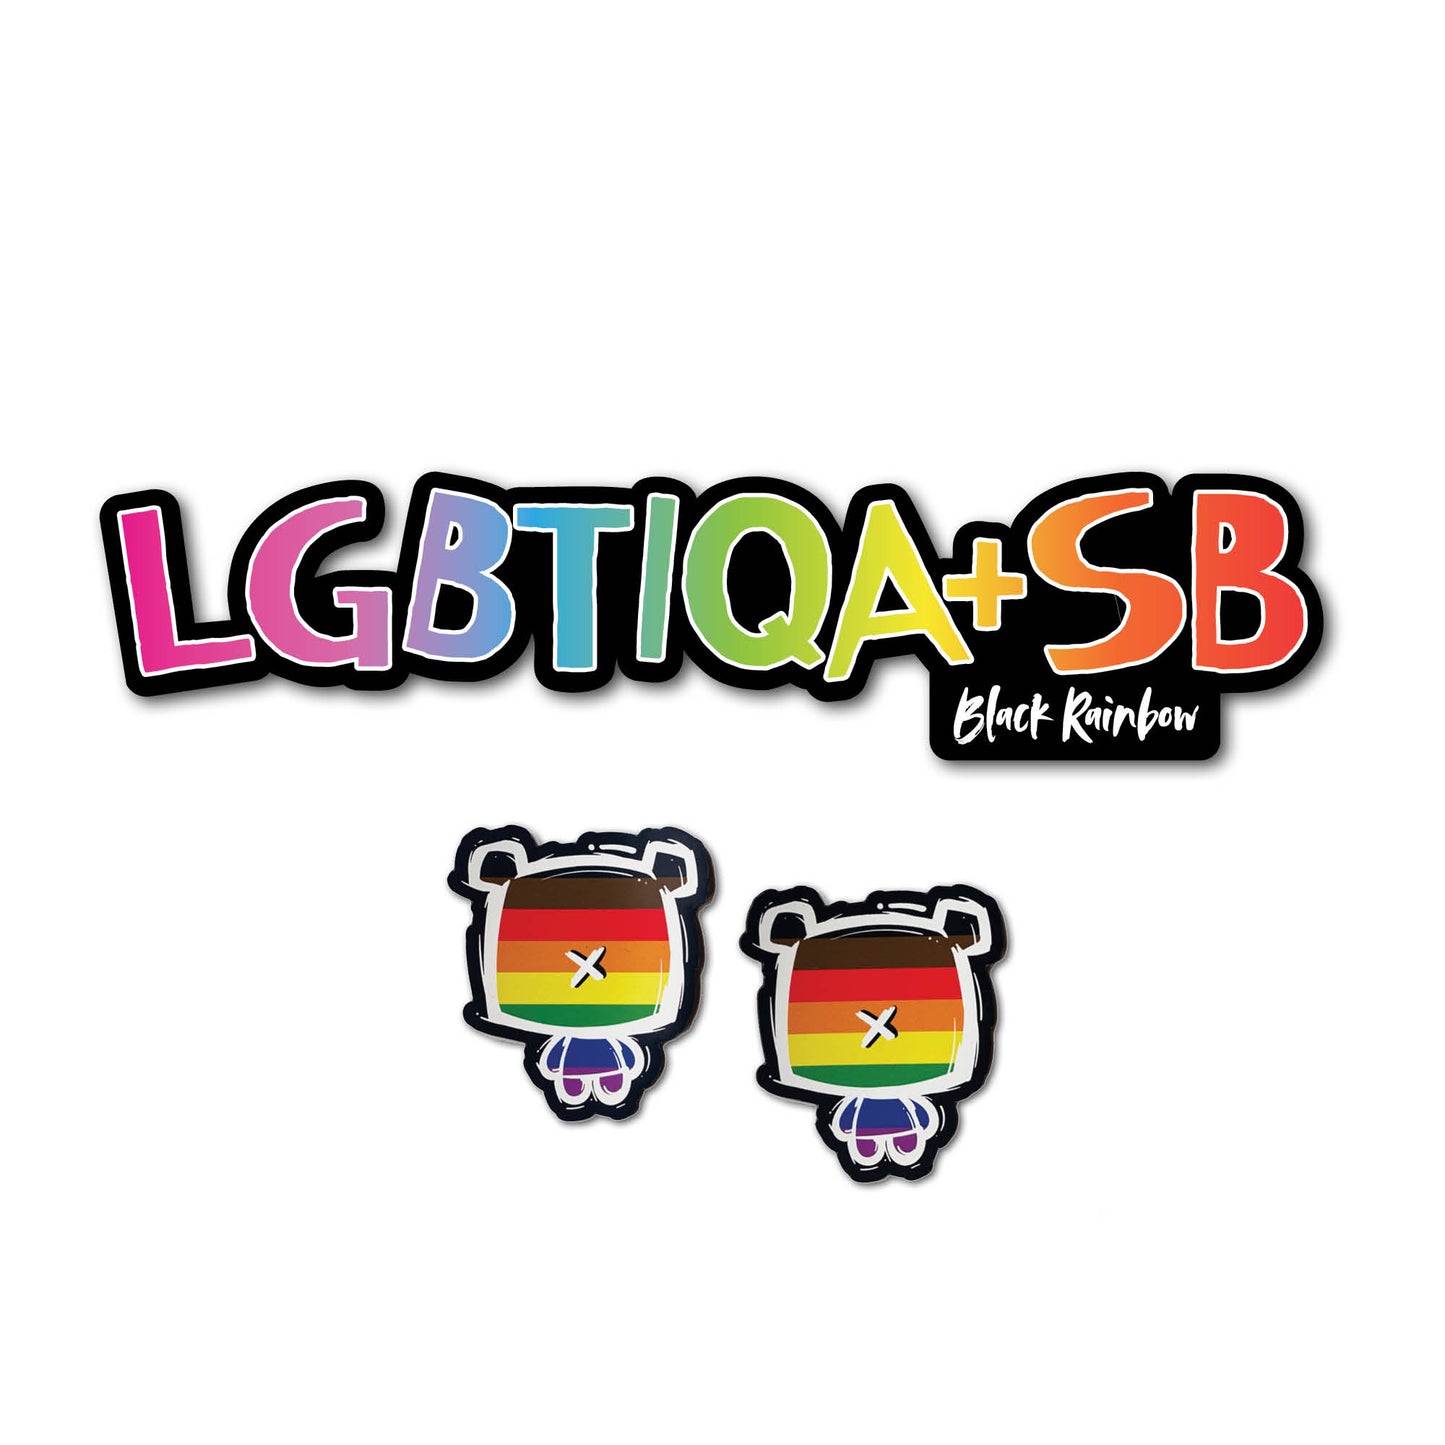 Black Rainbow's What is LGBTIQA+SB? Guidebook + Tea Towel Bundle